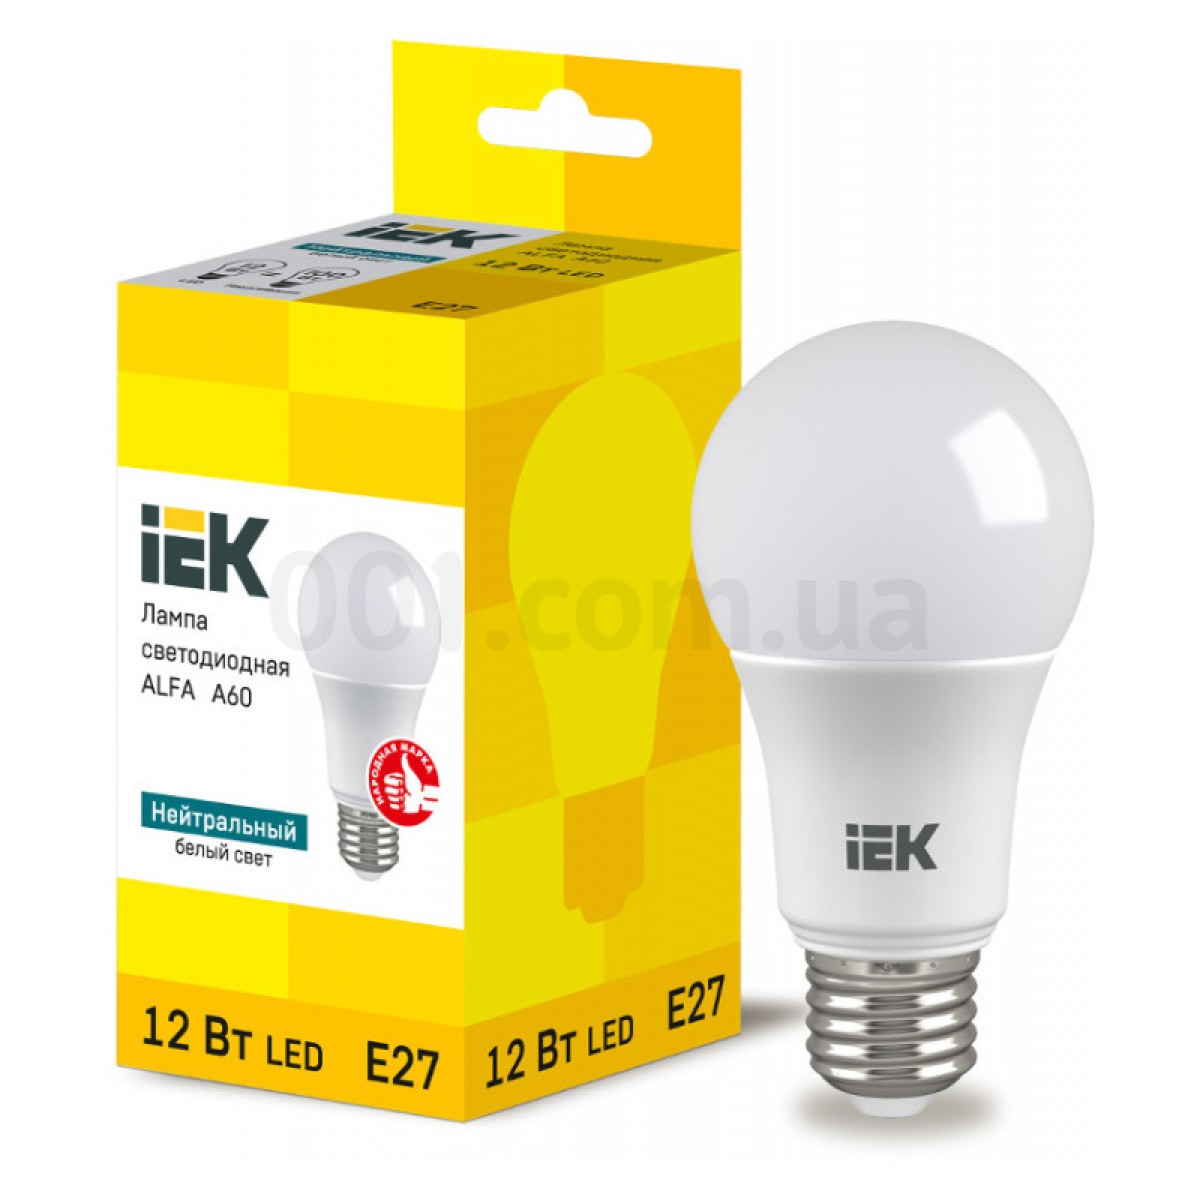 Светодиодная лампа LED ALFA A60 (груша) 12 Вт 230В 4000К E27, IEK 256_256.jpg